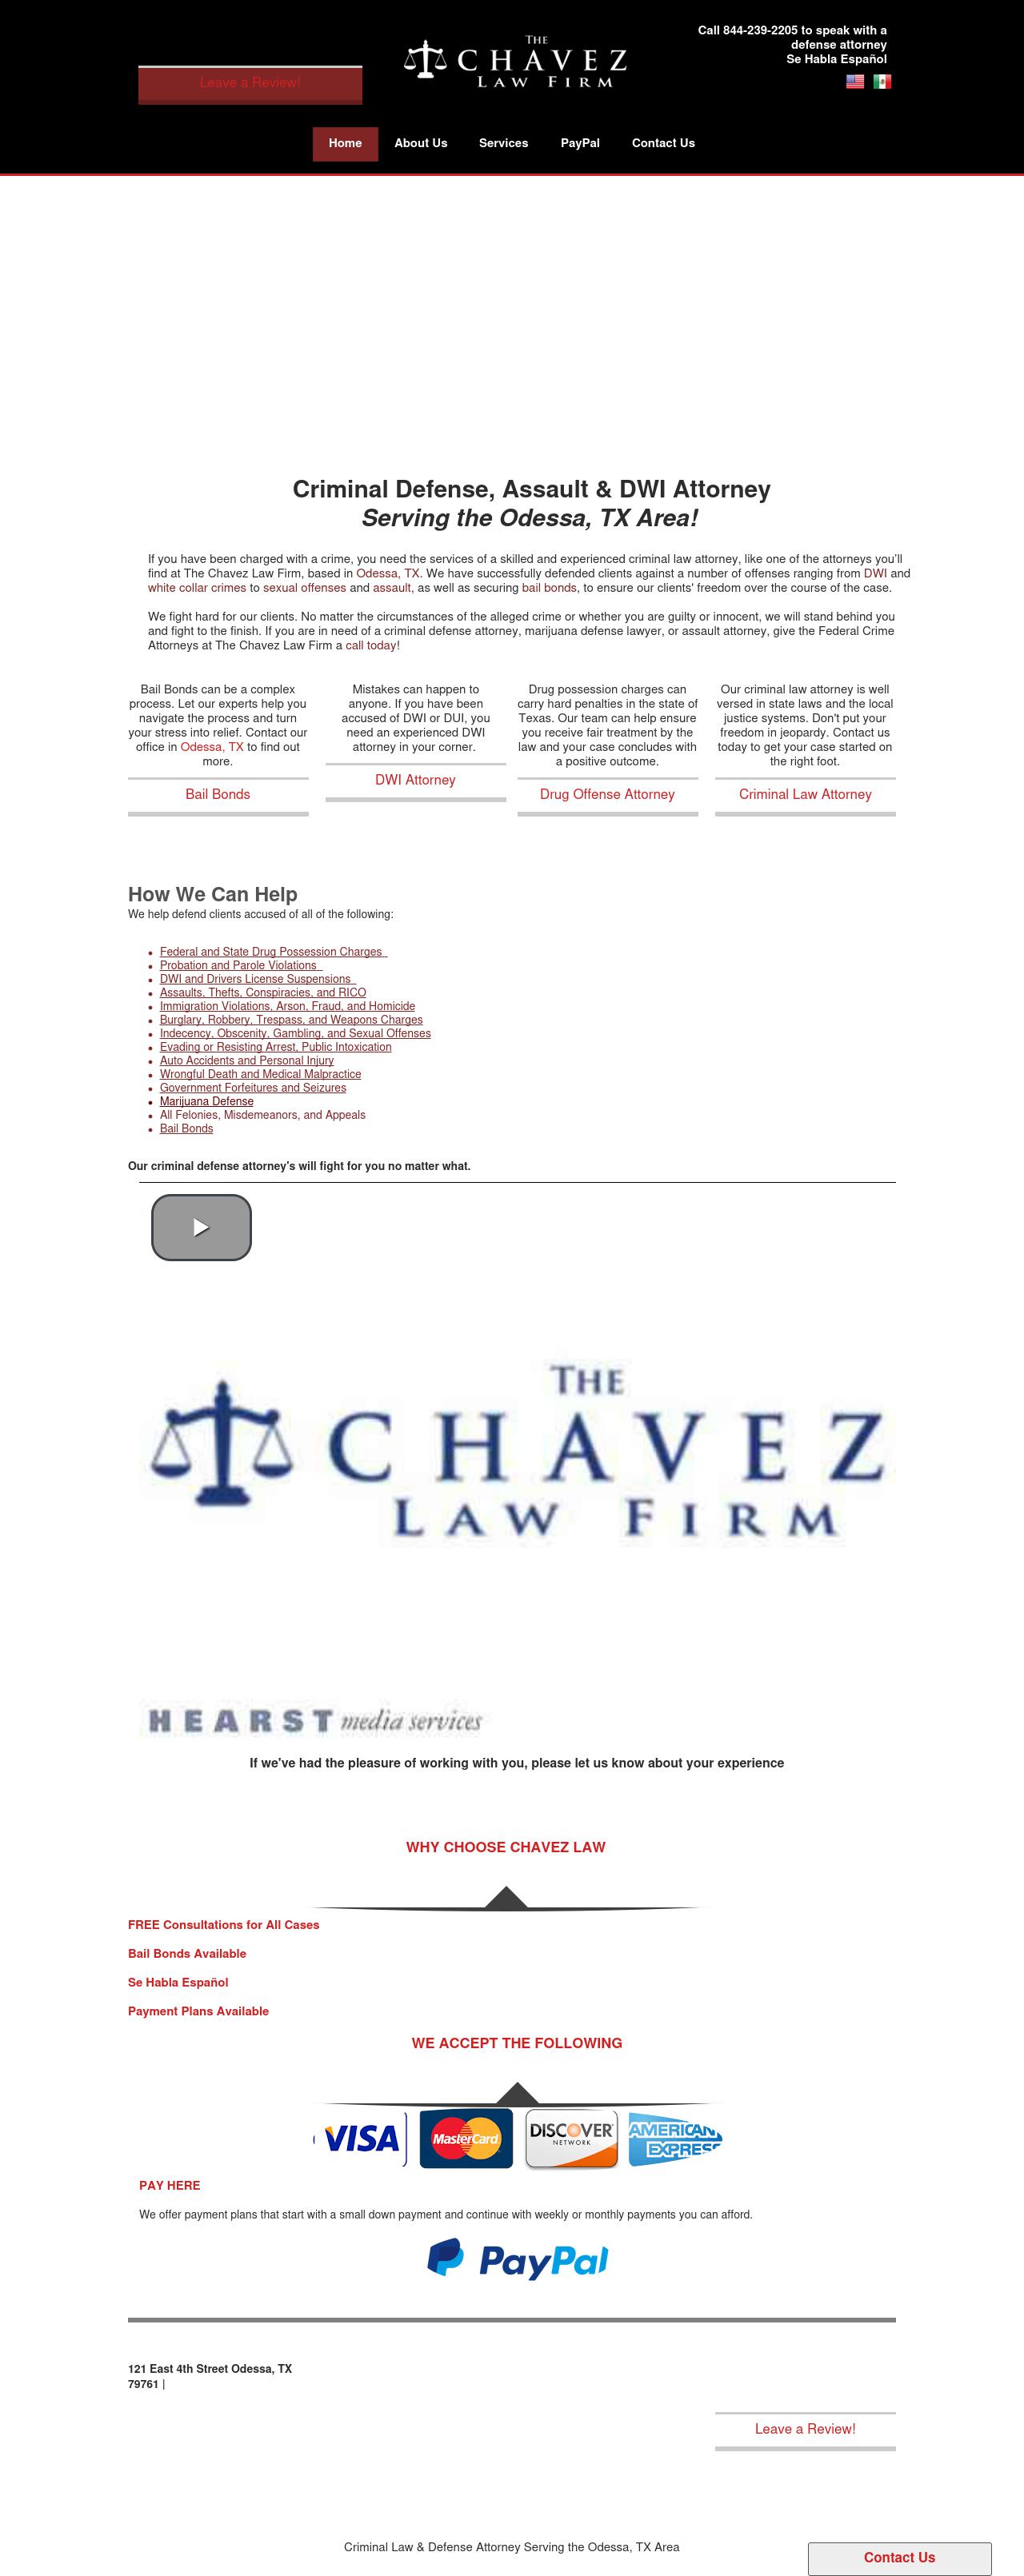 Chavez Law Firm - Odessa TX Lawyers